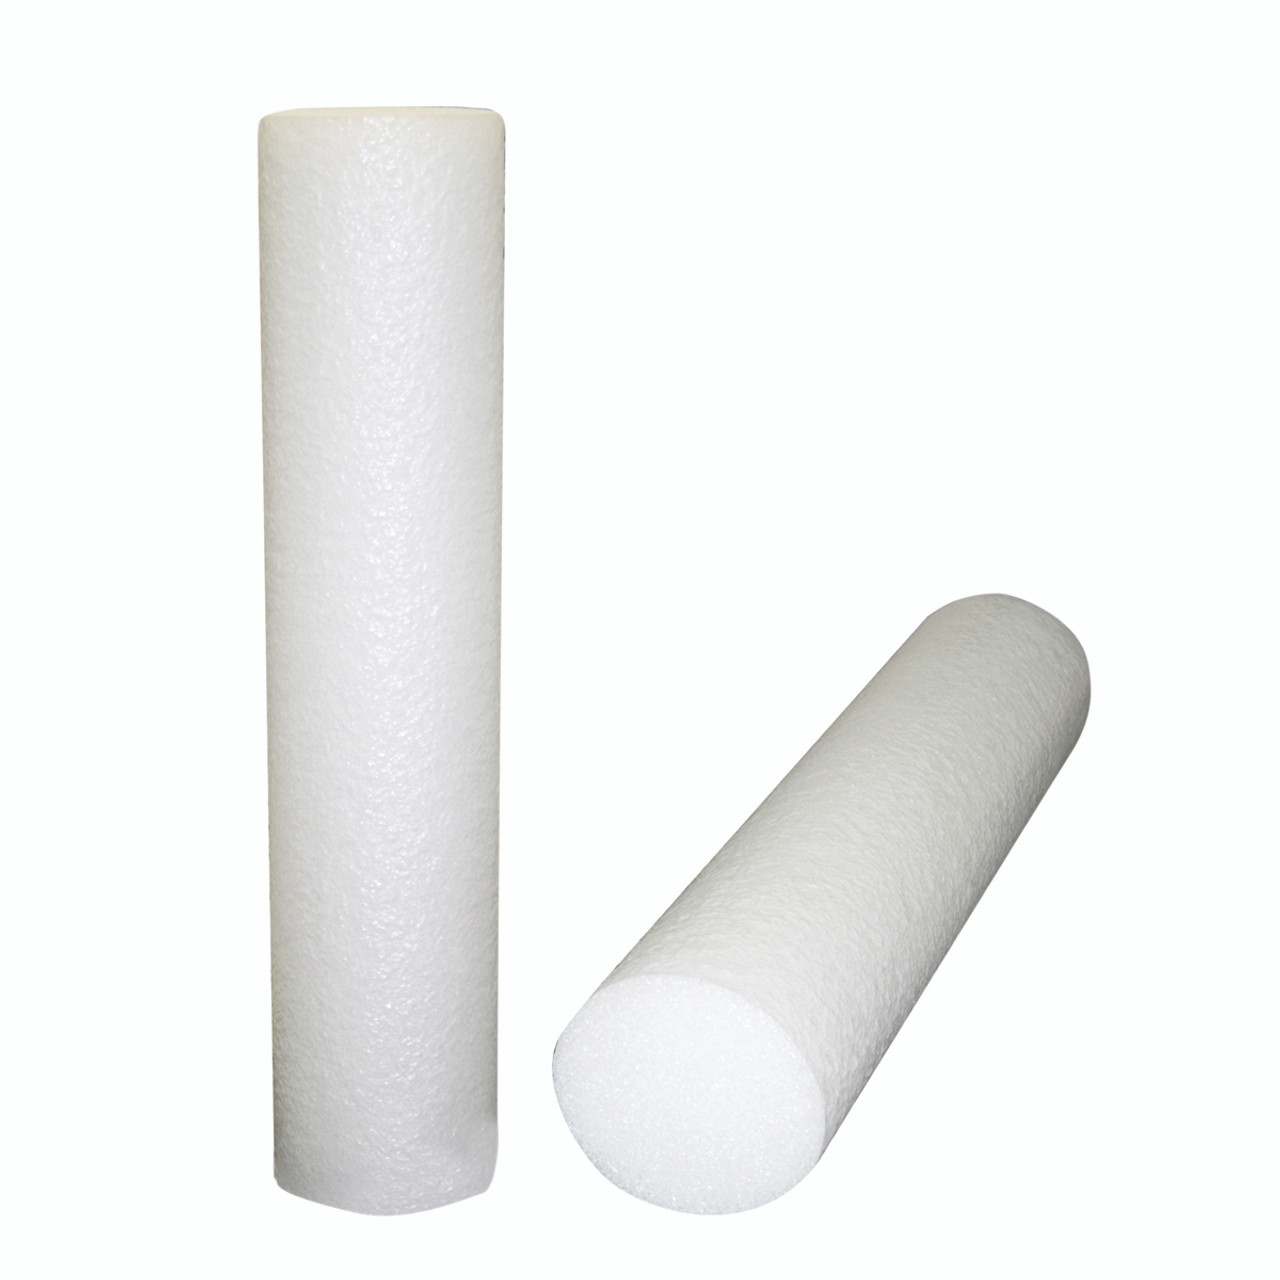 CanDo¨ Foam Roller - Jumbo - White PE foam - 8" x 12" - Round